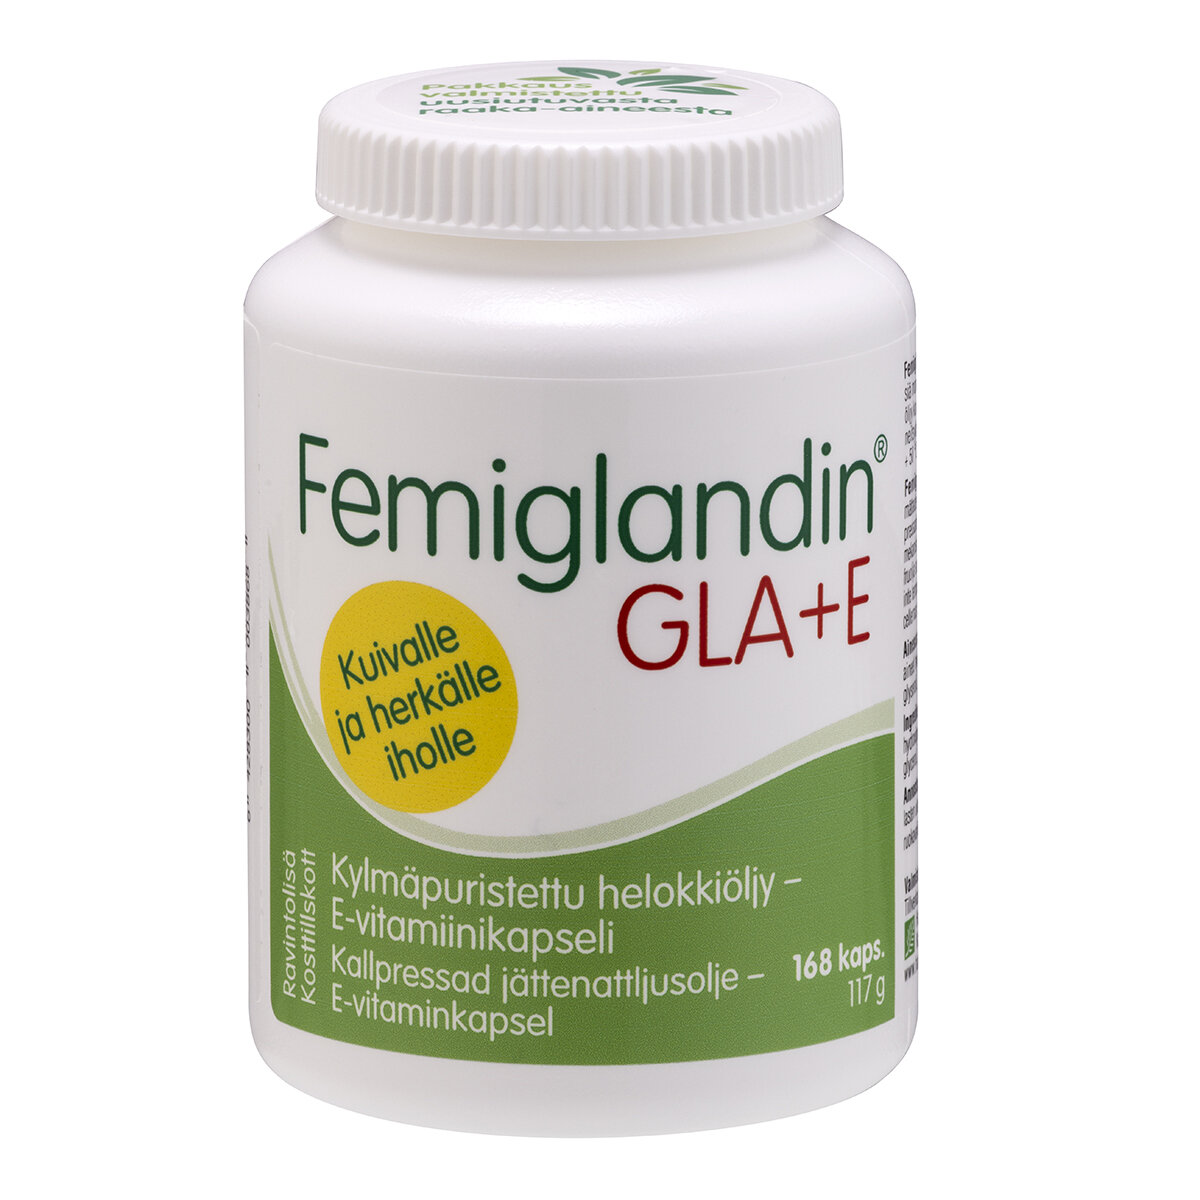 Femiglandin Gla+E